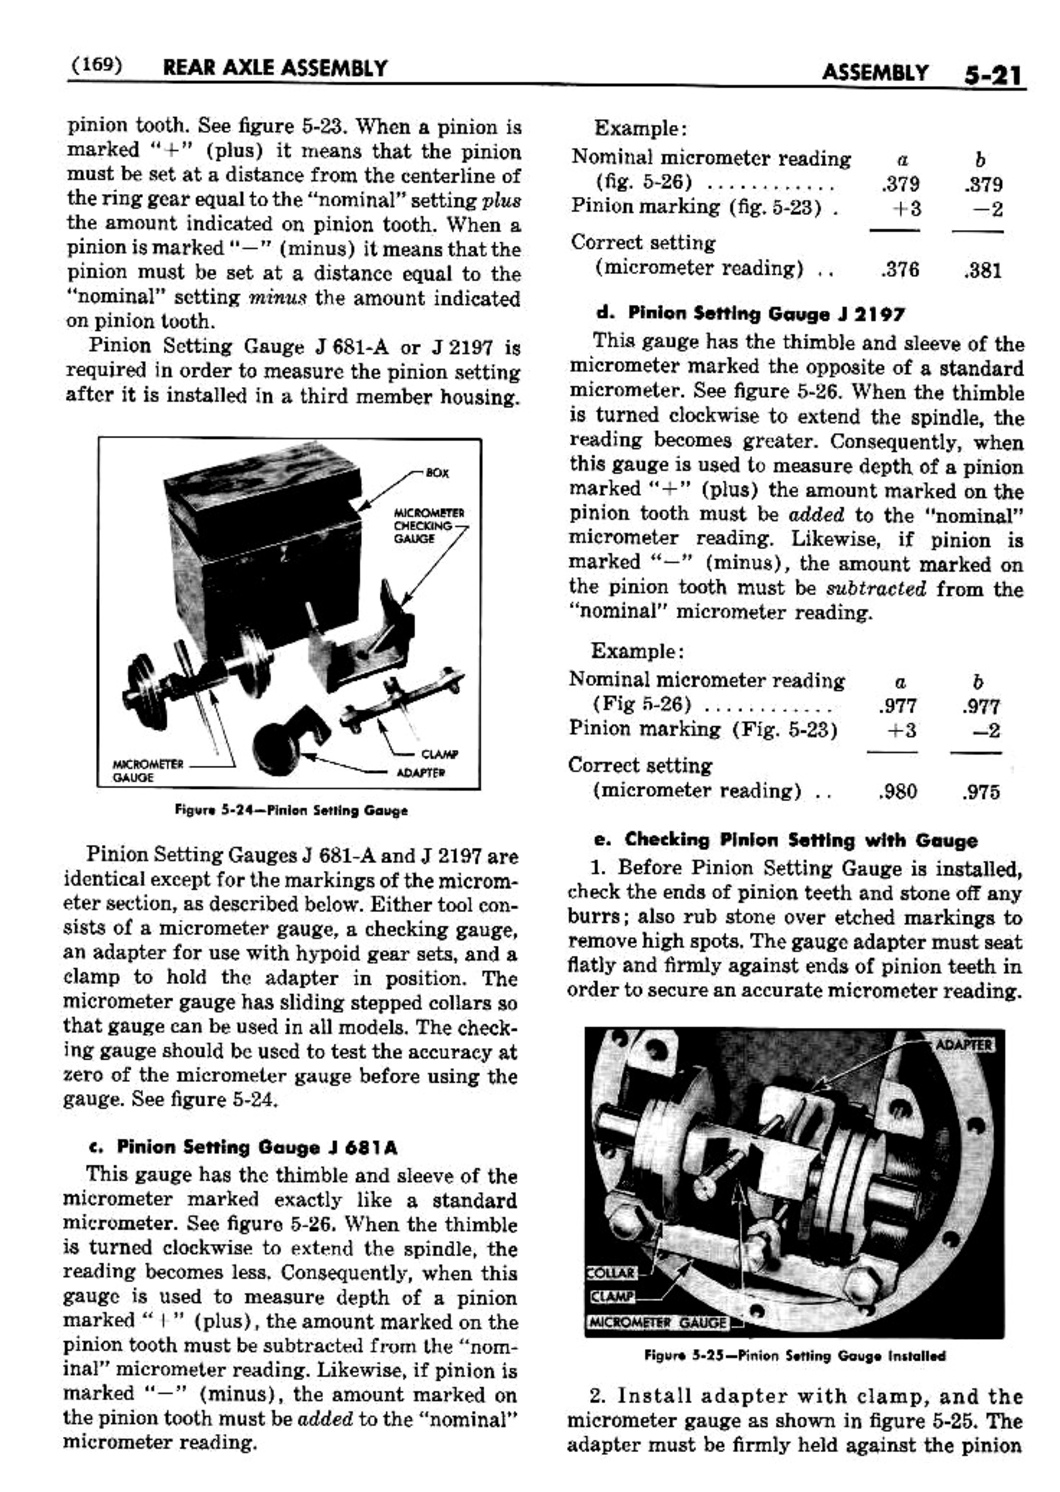 n_06 1950 Buick Shop Manual - Rear Axle-021-021.jpg